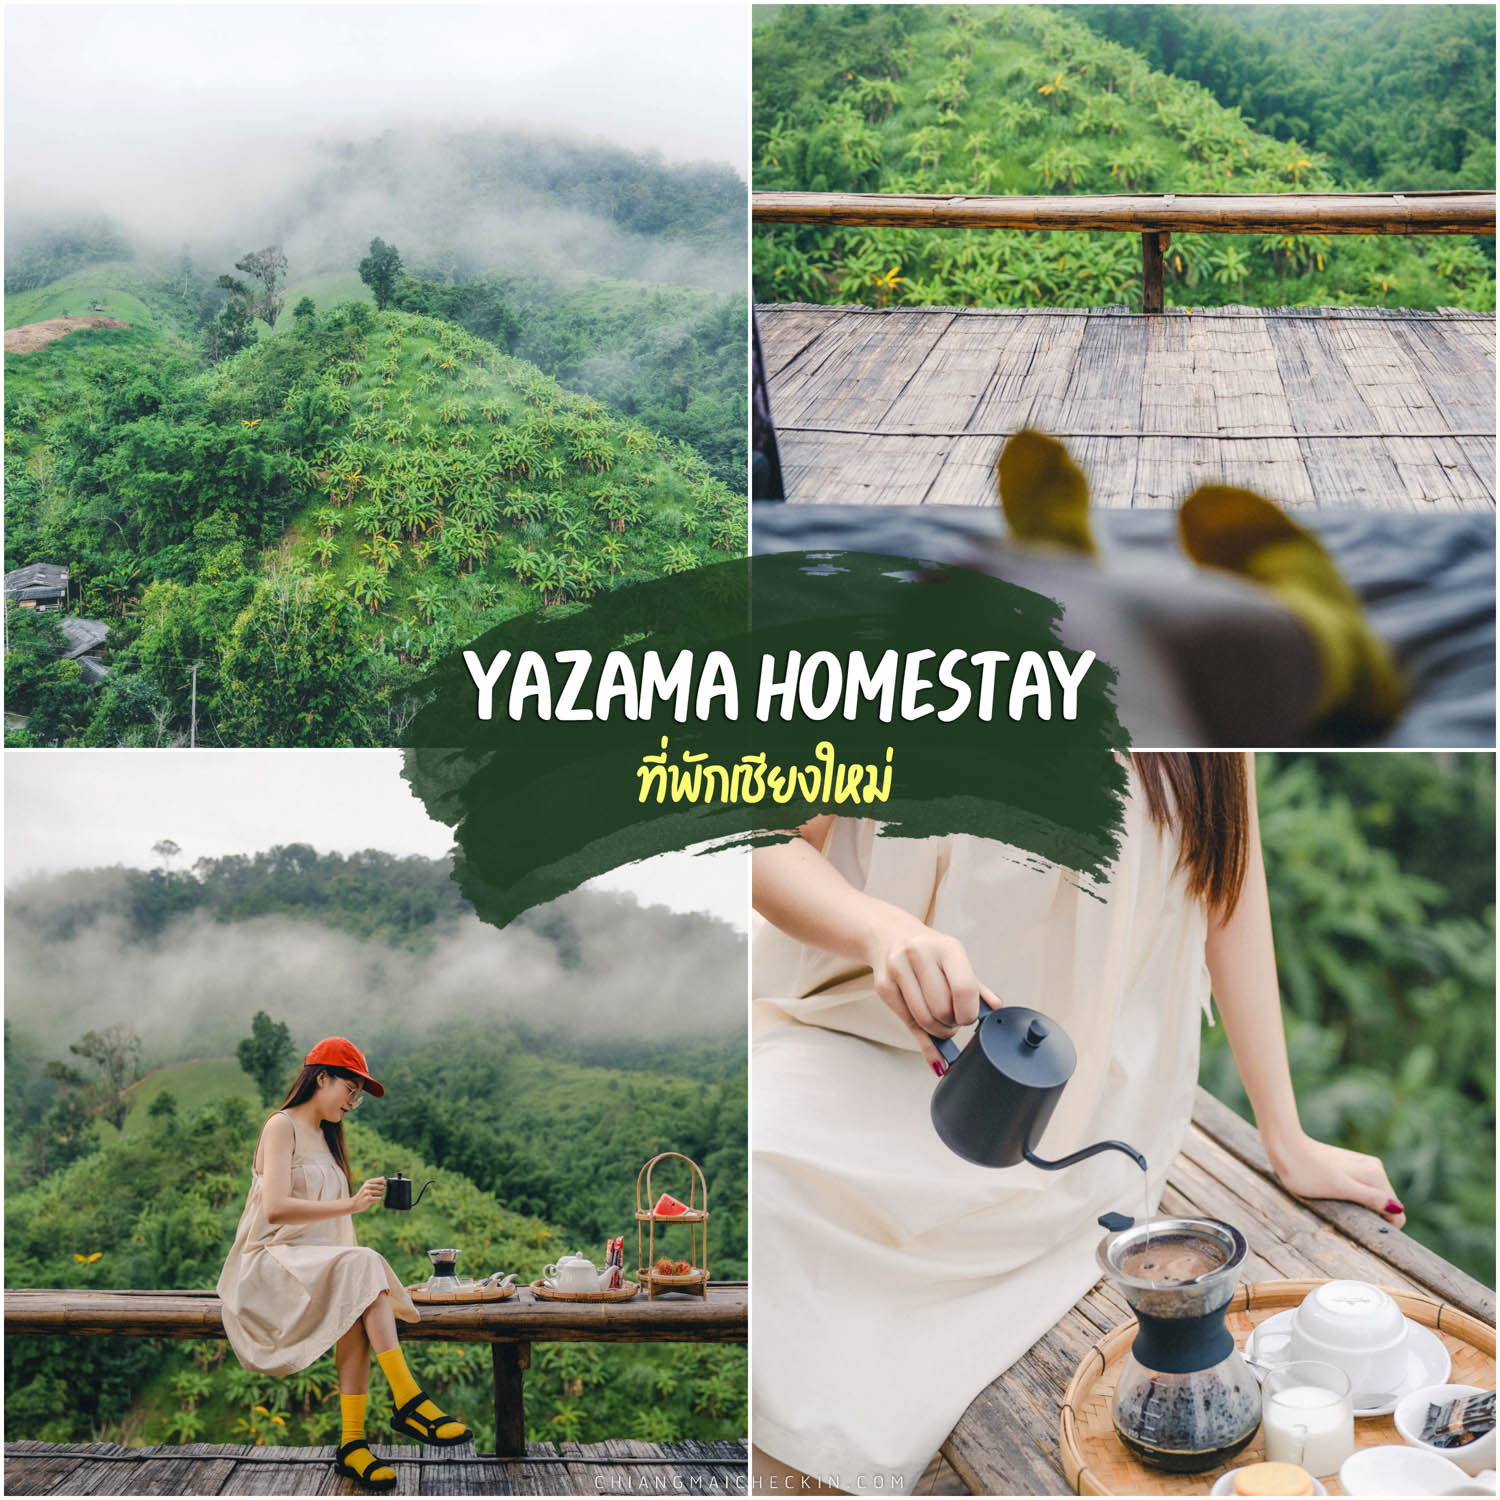 Yamaza-Homestay-ที่พักเชียงใหม่  ที่พักเชียงใหม่,วิวหลักล้าน,โรงแรม,รีสอร์ท,ป่า,เขา,ธรรมชาติ,chiangmai